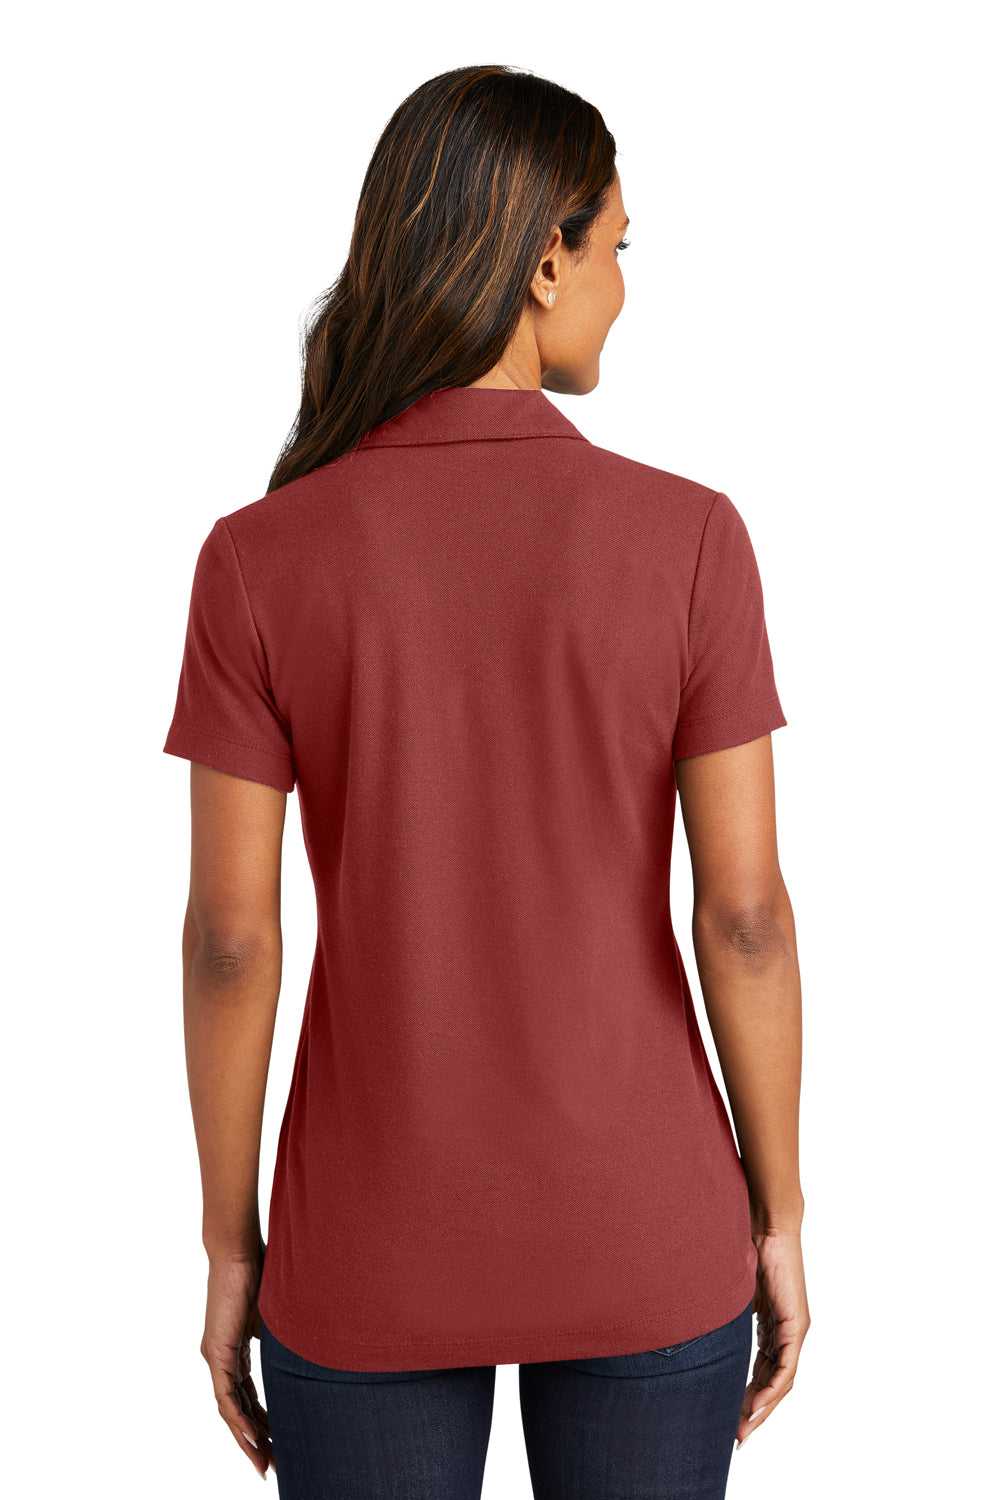 Port Authority LK867 Womens C-FREE Pique Short Sleeve Polo Shirt Garnet Red Back